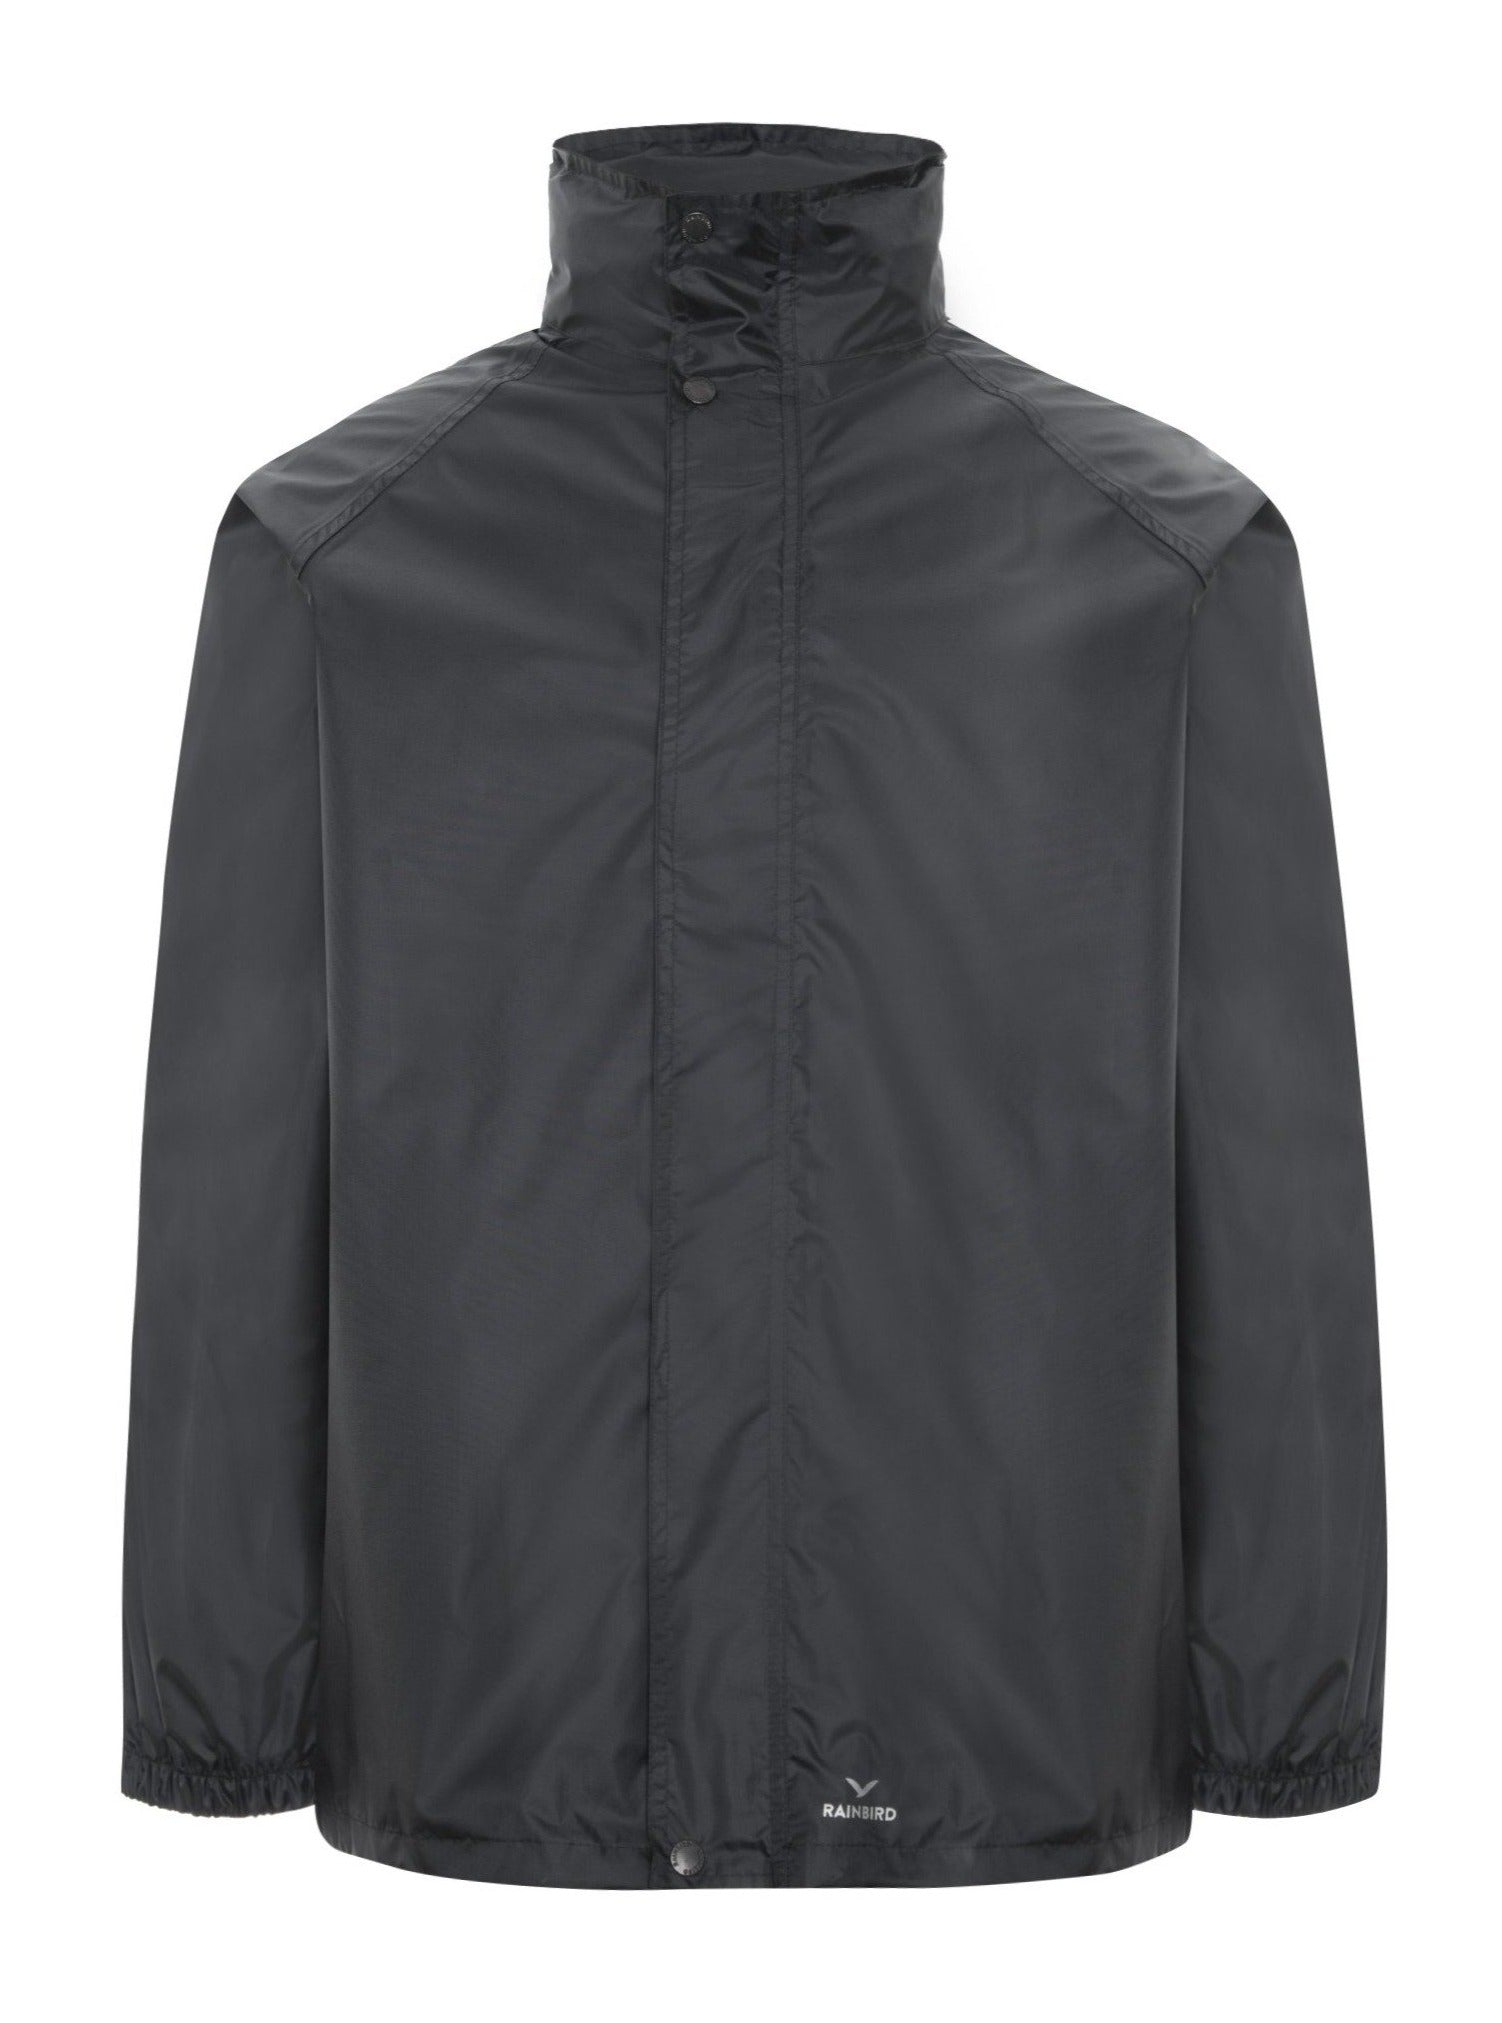 RainBird Stowaway Jacket Adults 8004-7 - #1 Workwear Store